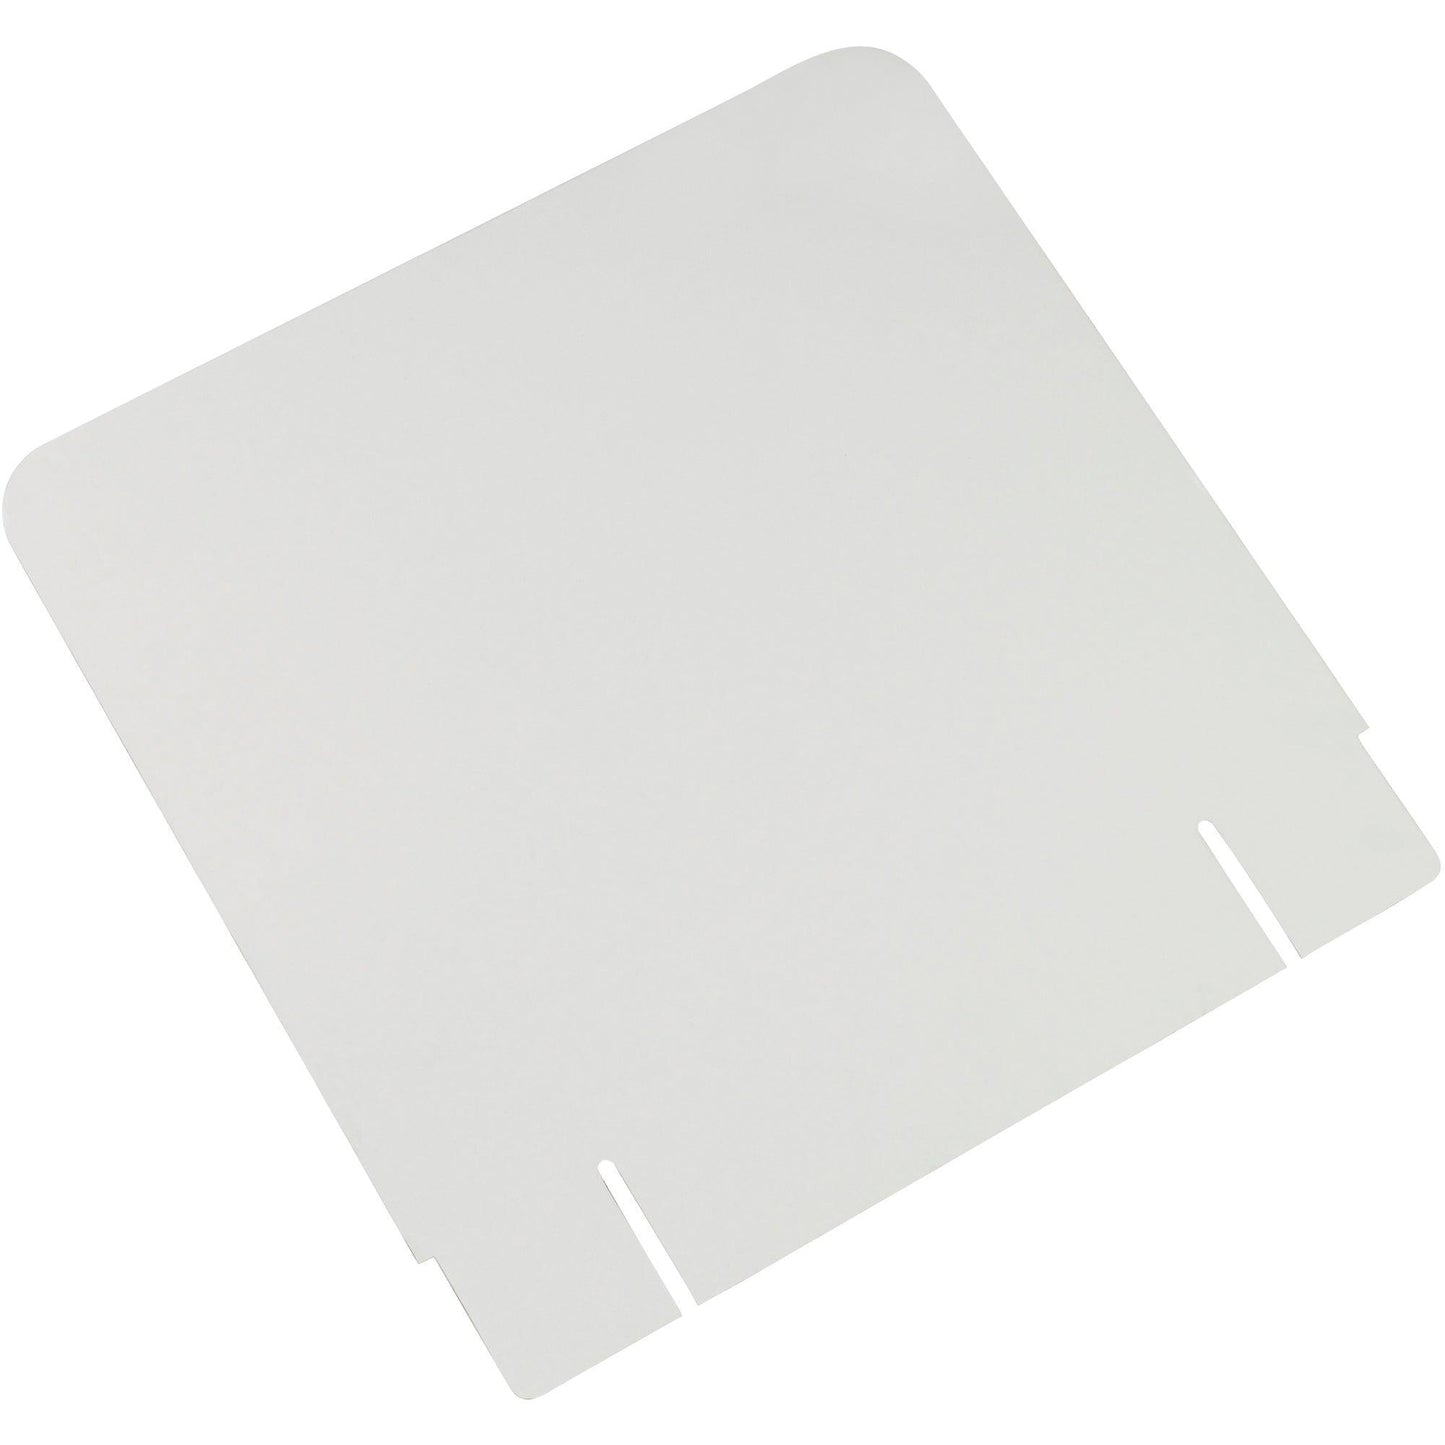 Large Bin Floor Display White Header Cards - MDIS103H